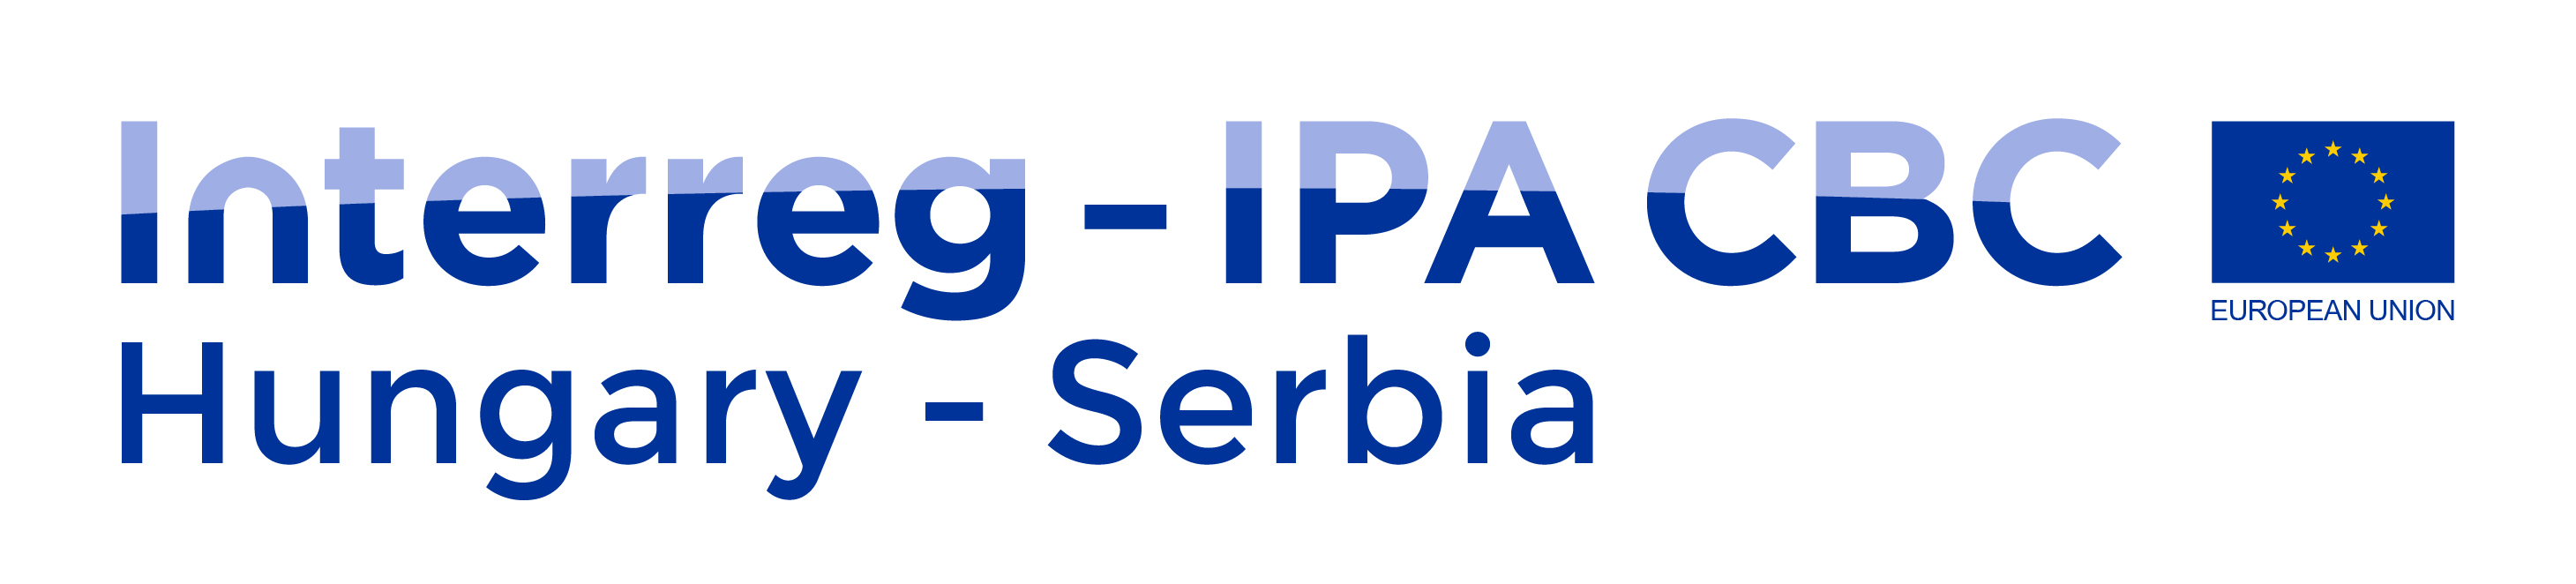 Interreg - IPA CBC Hungary - Serbia